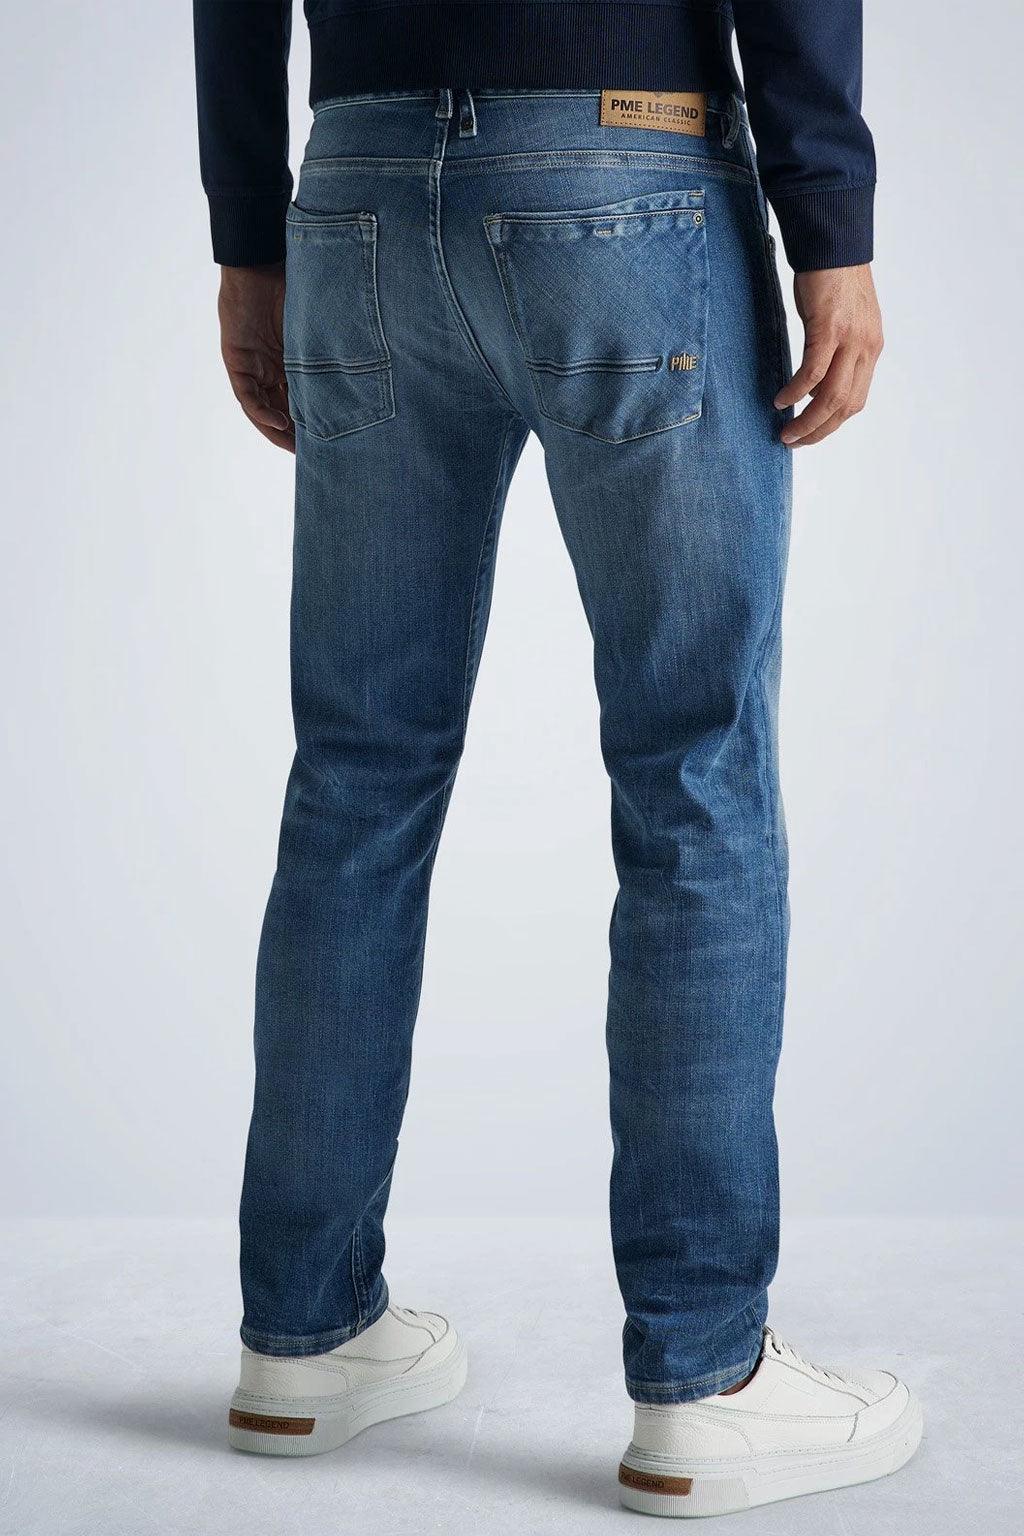 PME Legend jeans | Big Boss | the menswear concept